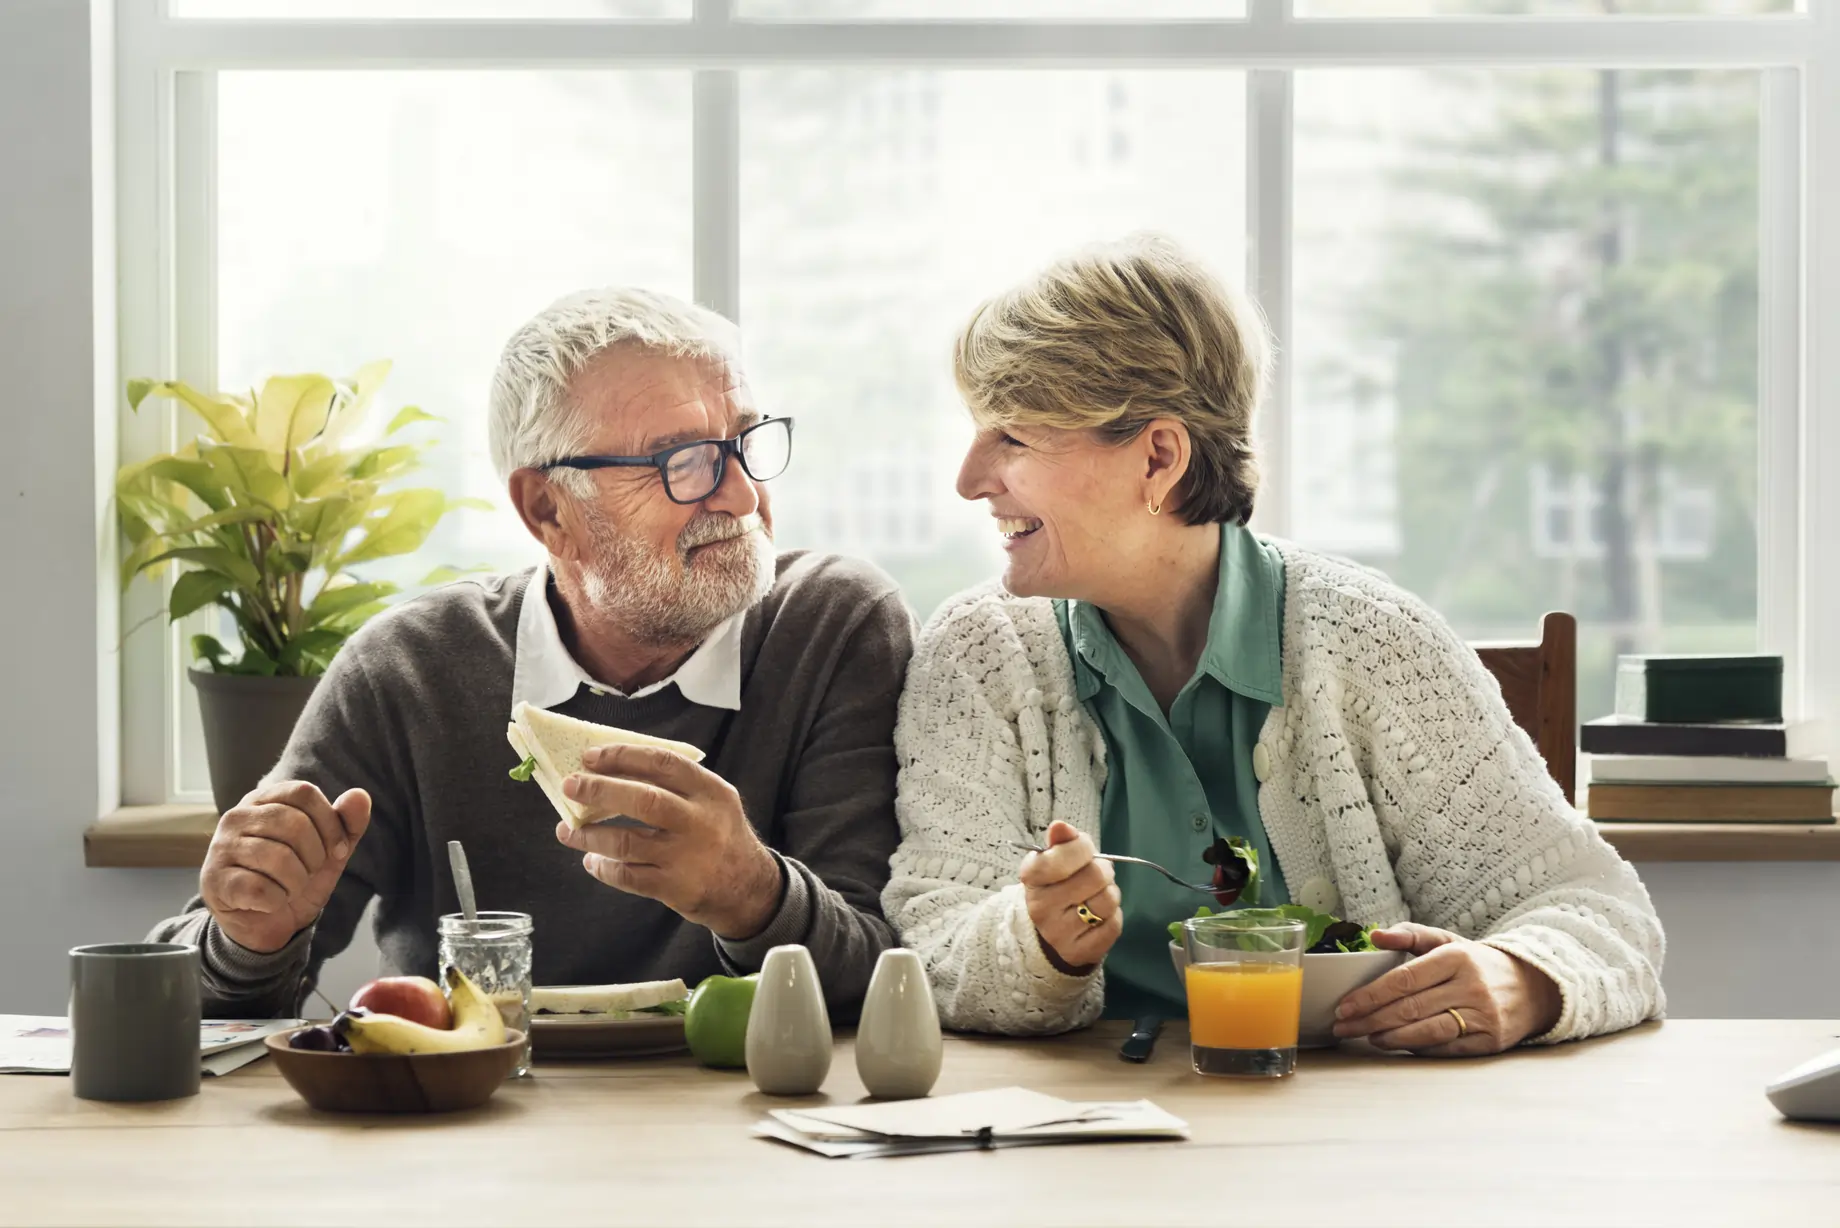 Elderly couple enjoying breakfast together.